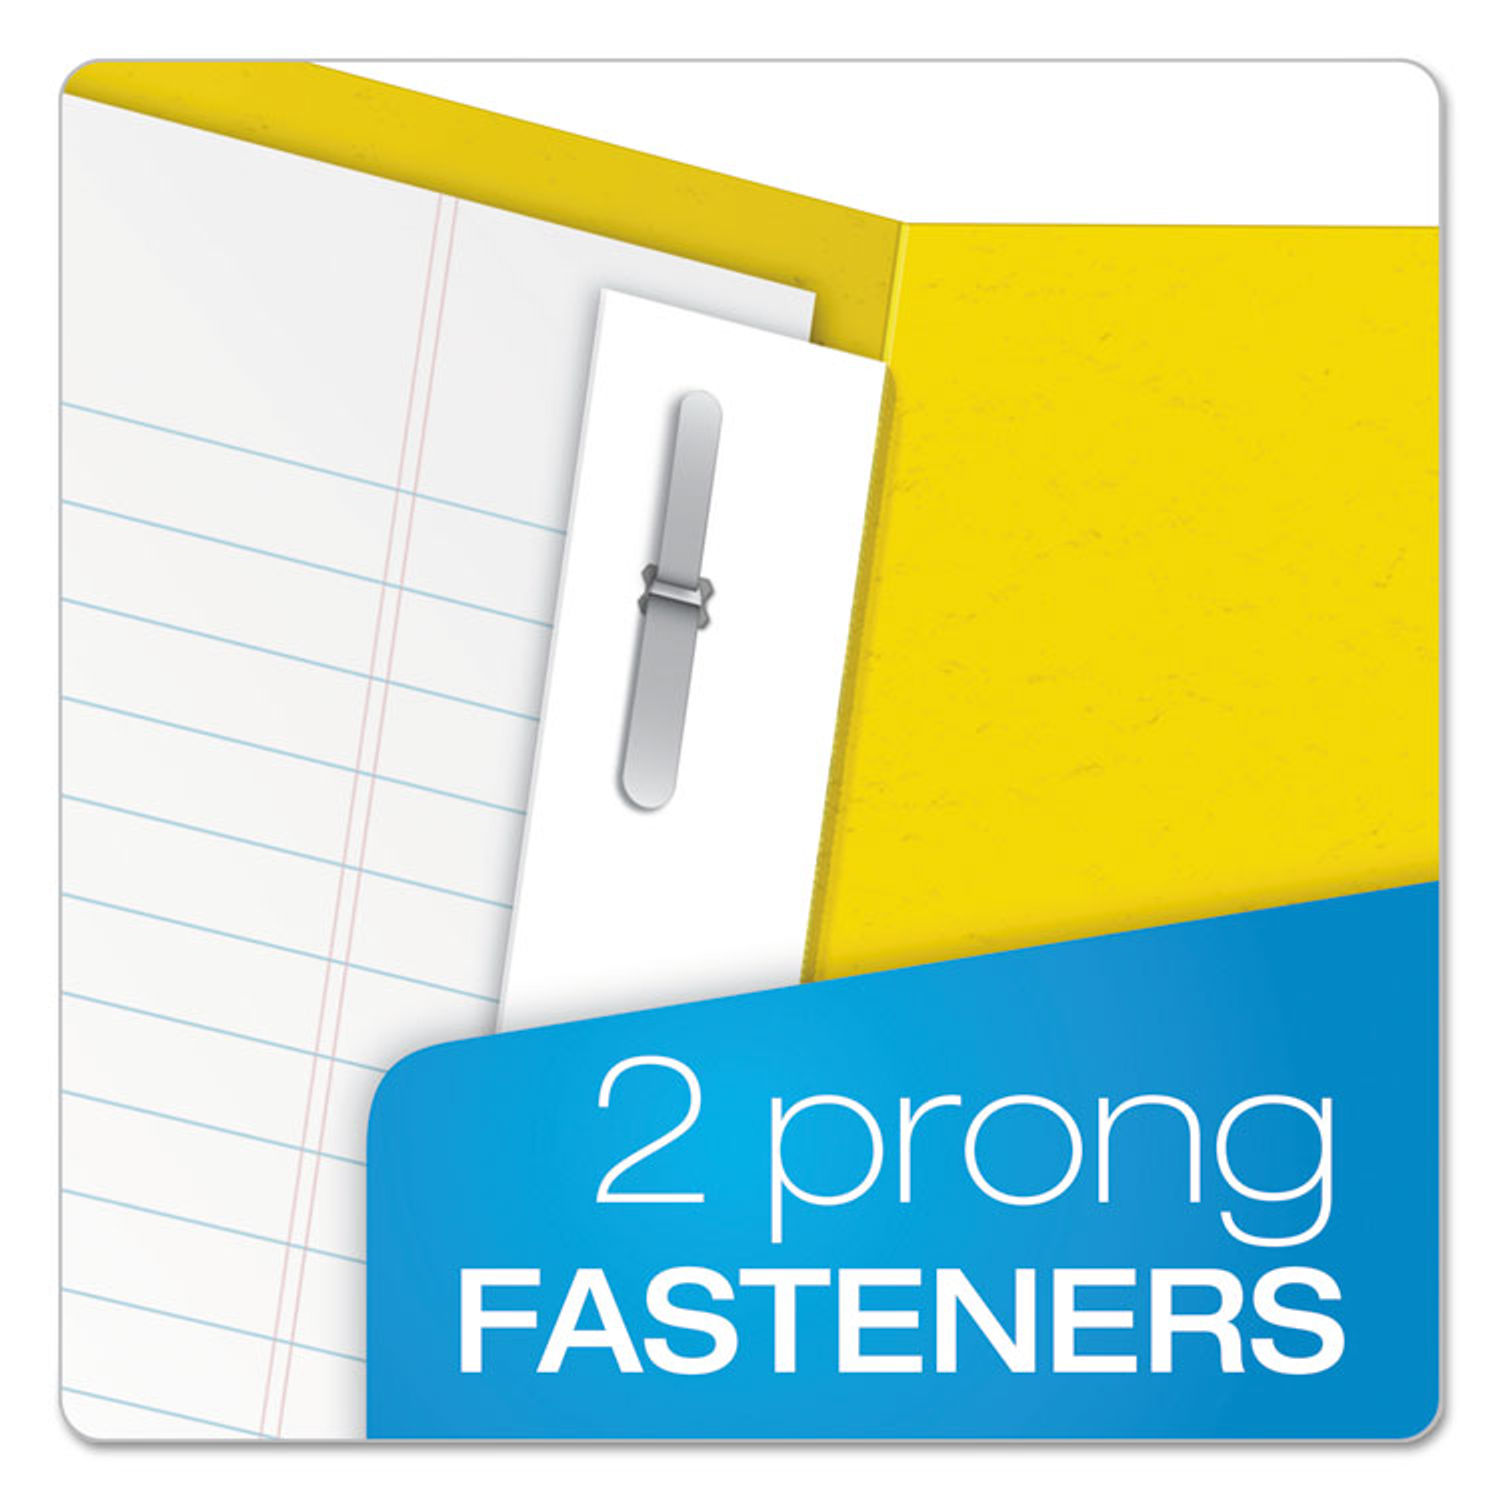 Twin-Pocket Folders with 3 Fasteners, 0.5